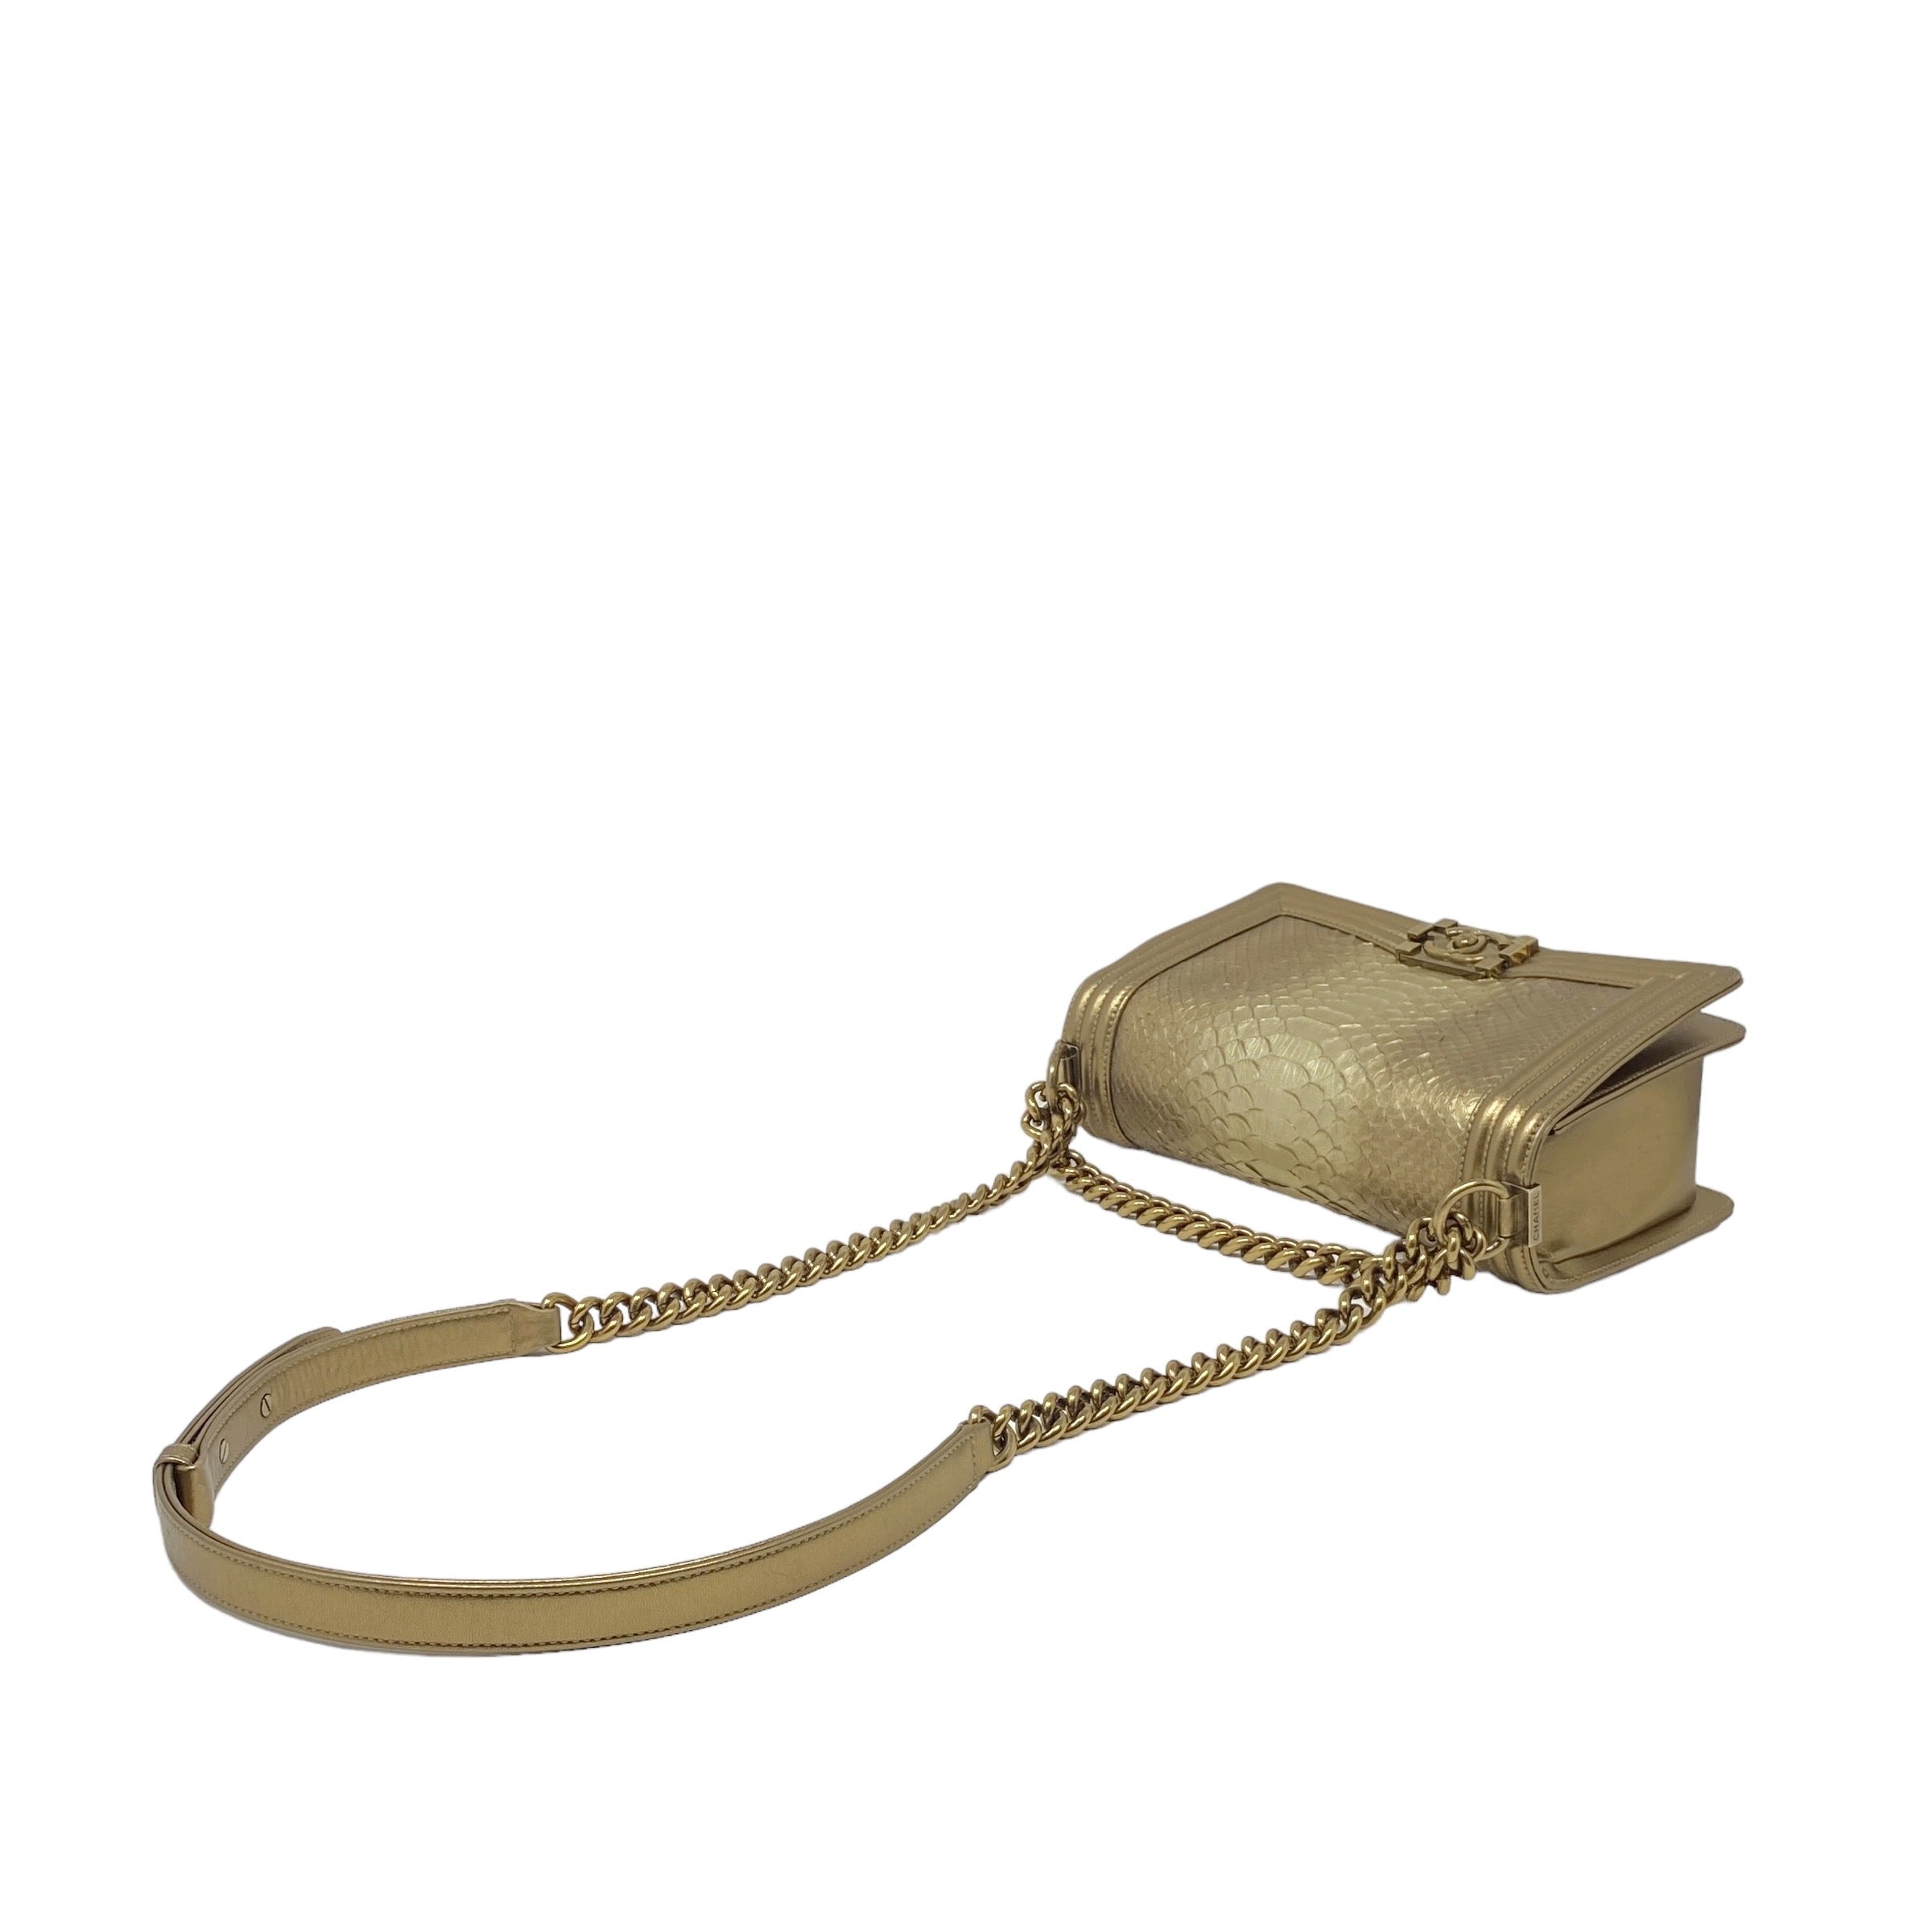 Chanel Gold Python Medium Boy Bag